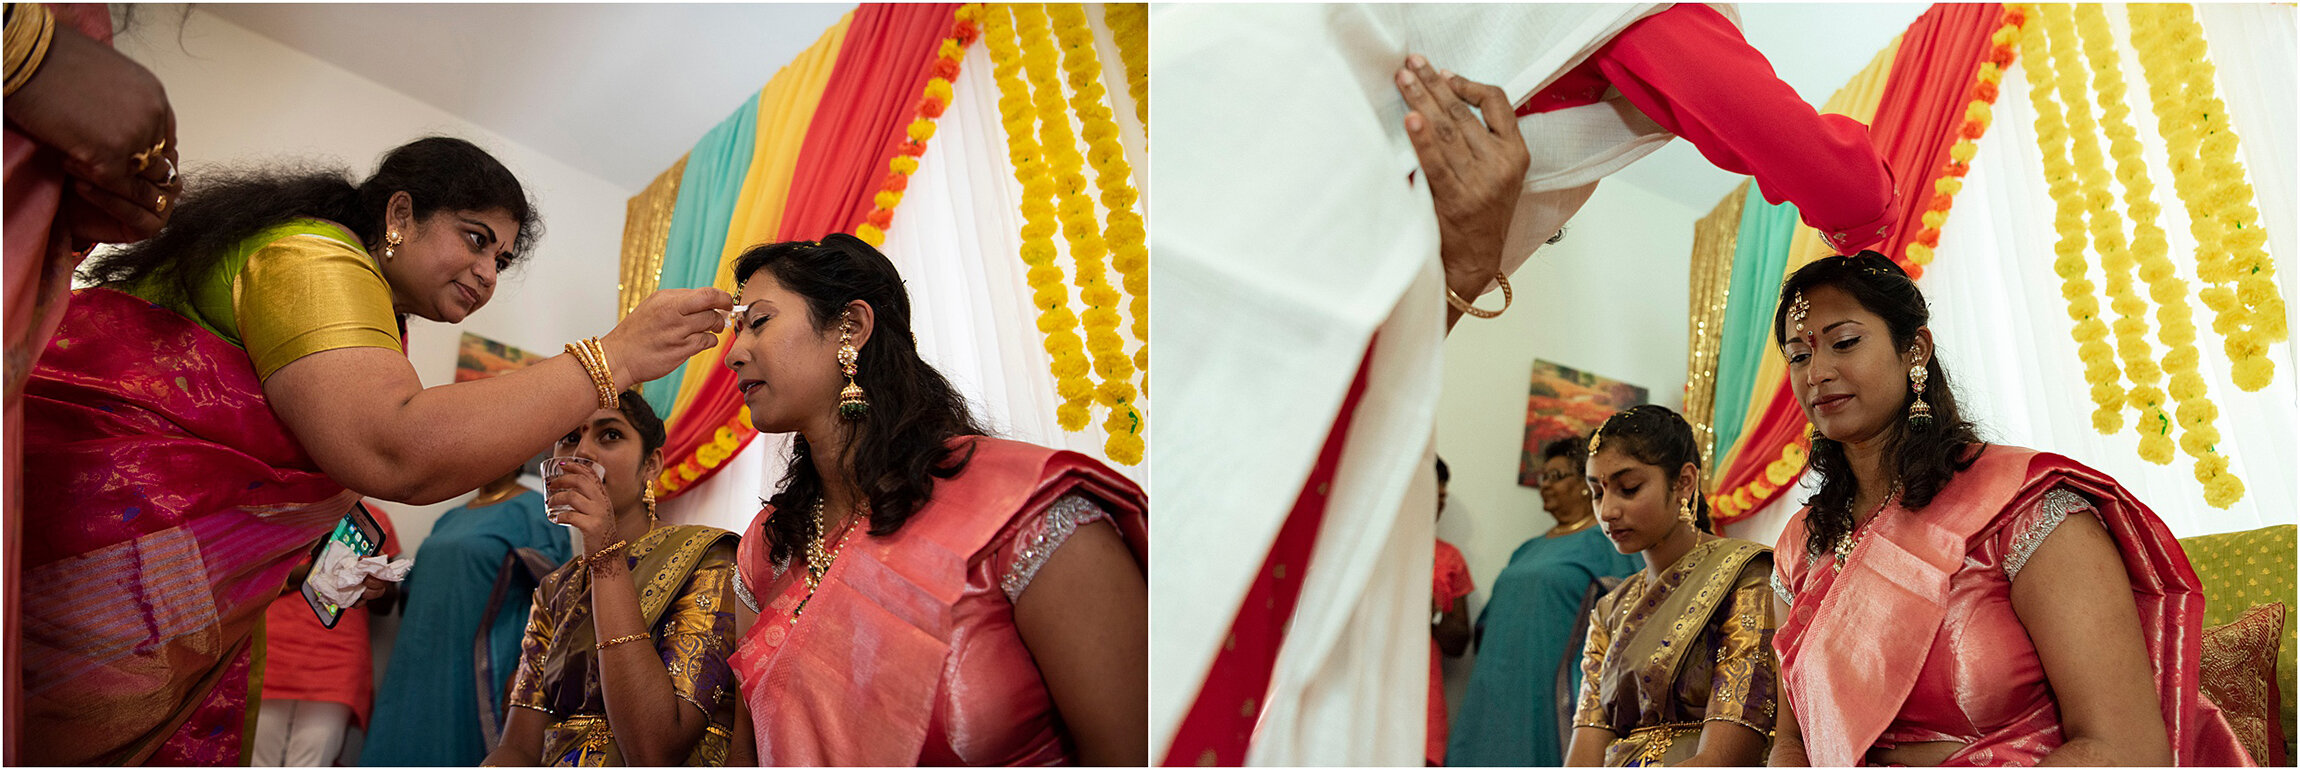 ©FianderFoto_Hindu Wedding Bermuda_021.jpg